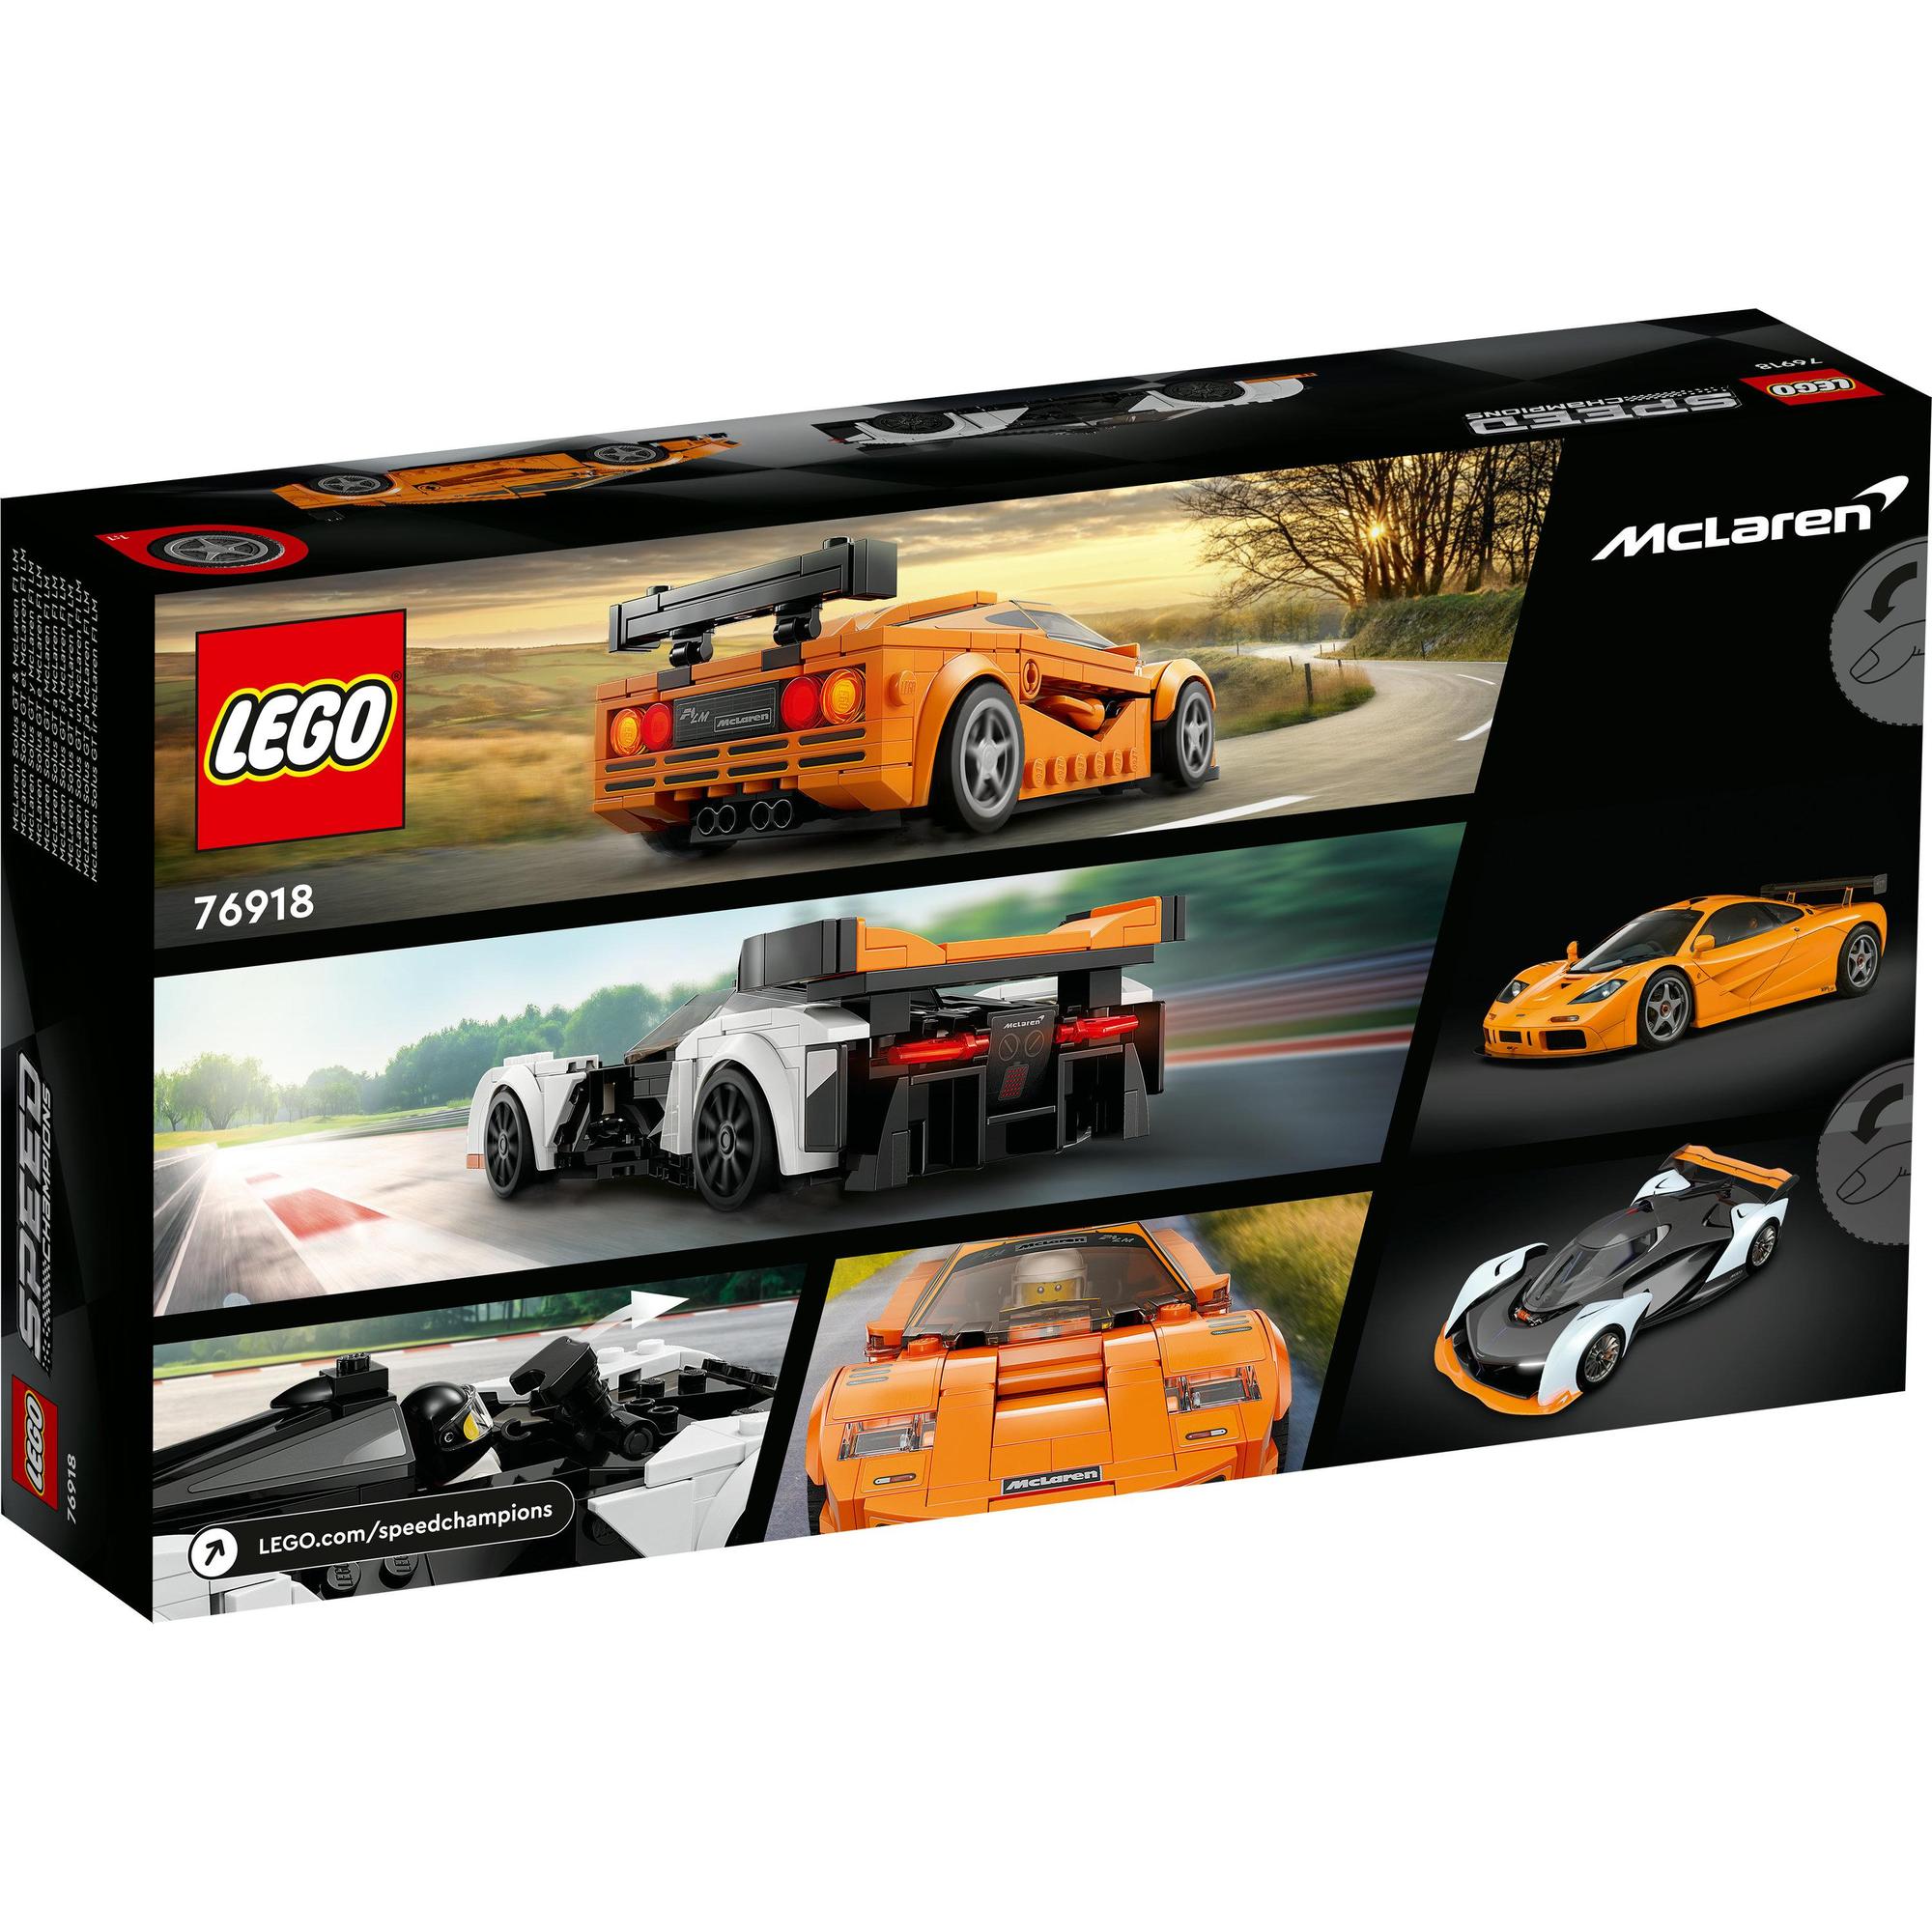 LEGO SPEED CHAMPIONS 76918 Siêu xe McLaren Solus GT &amp; McLaren F1 LM (581 chi tiết)